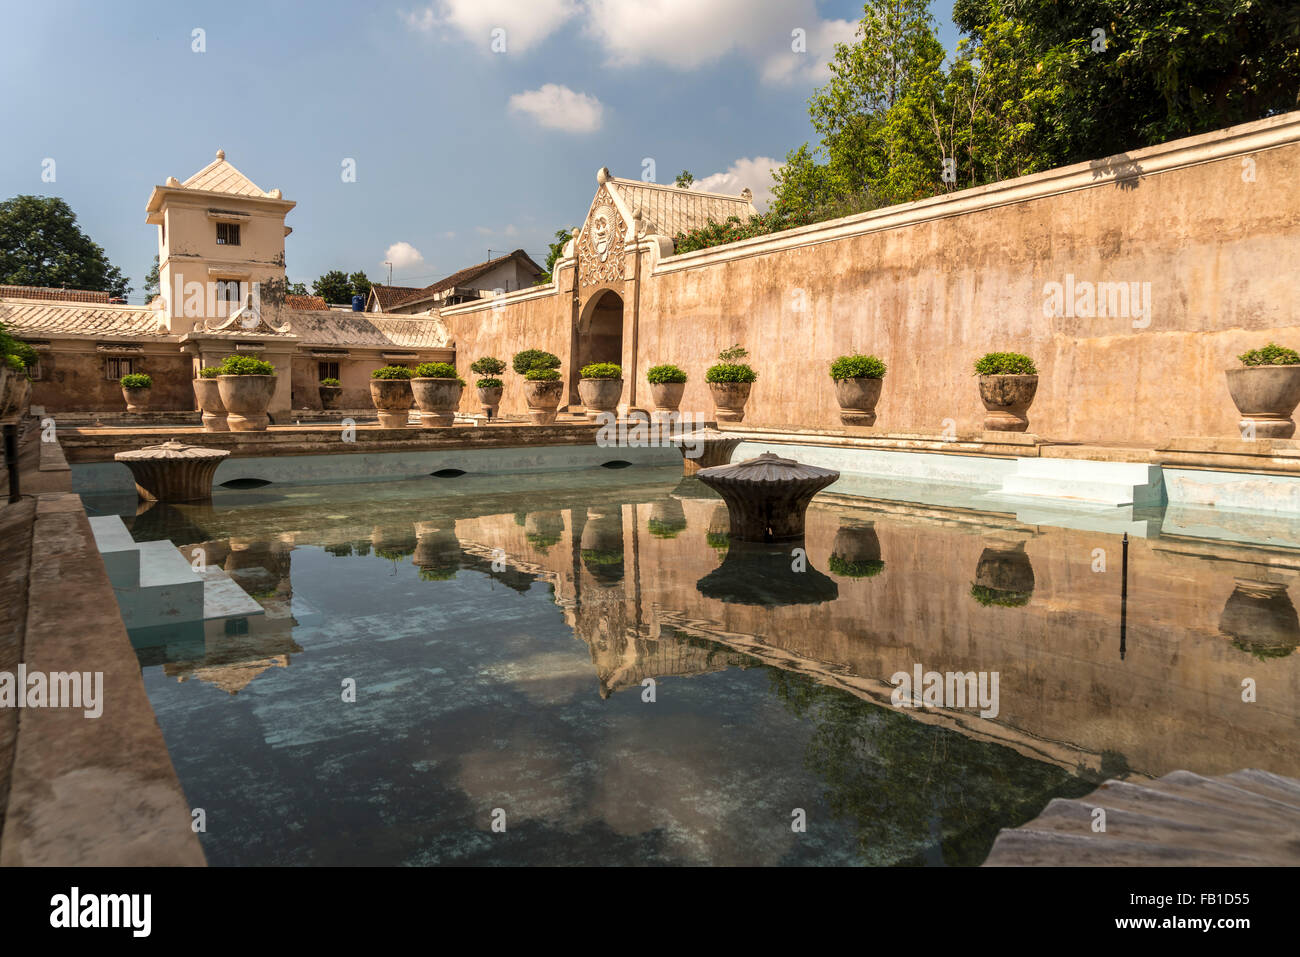 Baño,el Taman Sari castillo de agua, Yogyakarta, Java, Indonesia, Asia Foto de stock